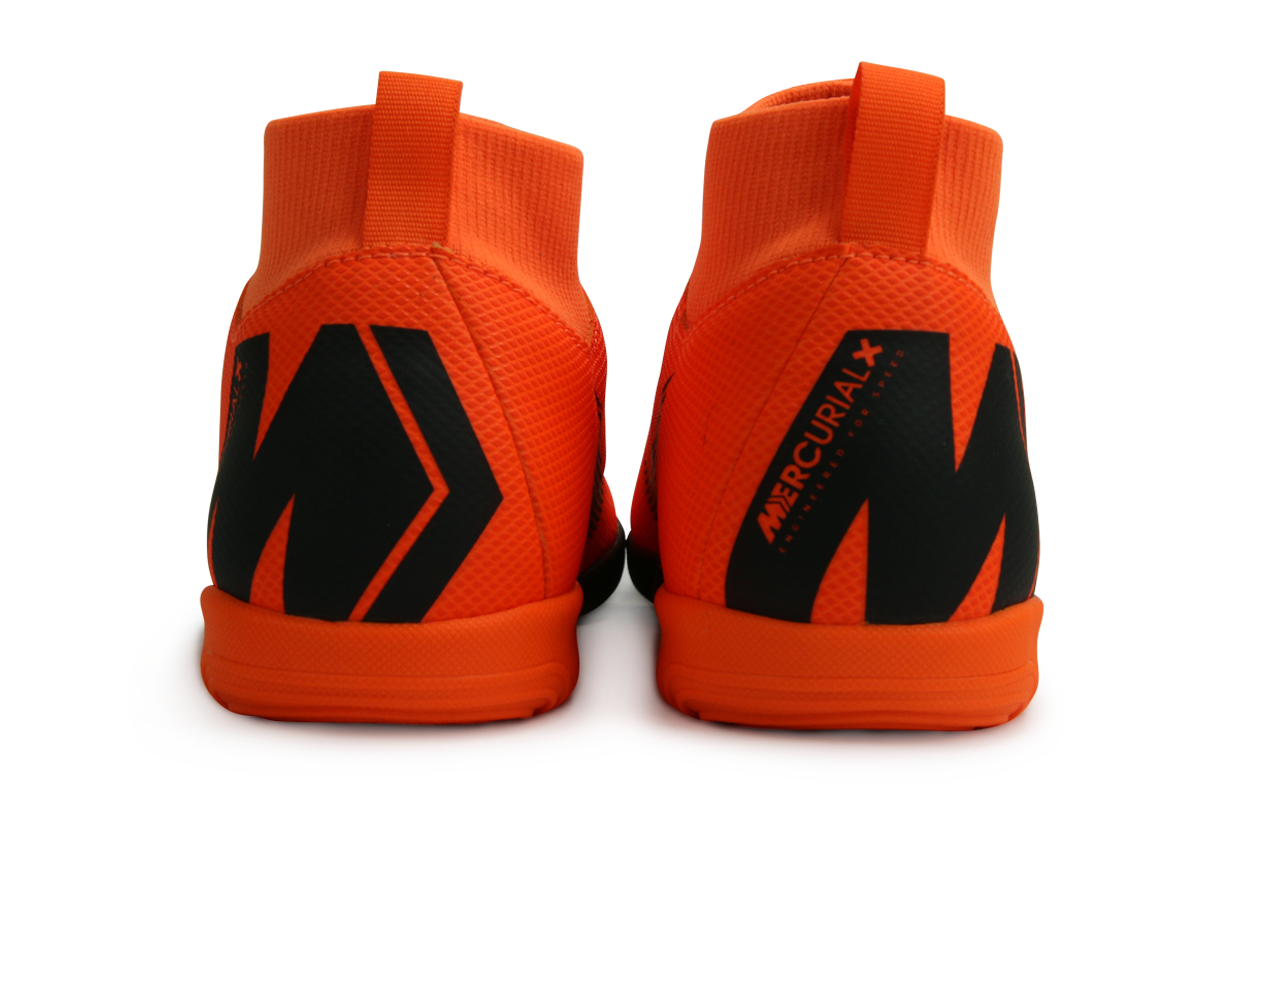 Nike Kids SuperflyX VI Academy GS Indoor Soccer Shoes Total Orange/Black